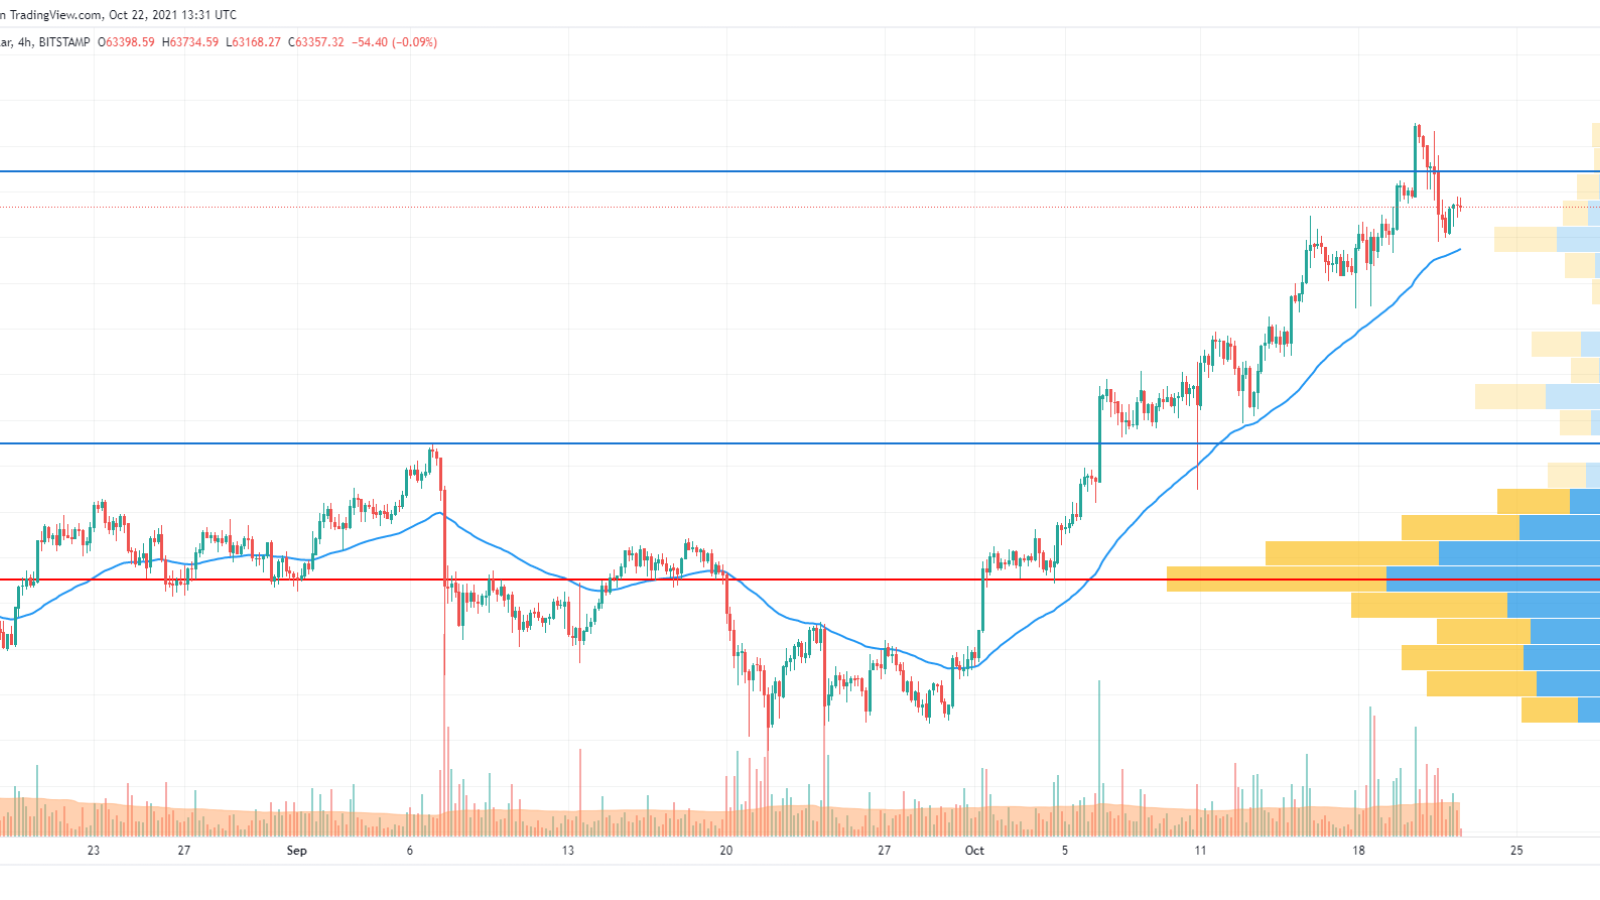 BTC/USD chart by TradingView